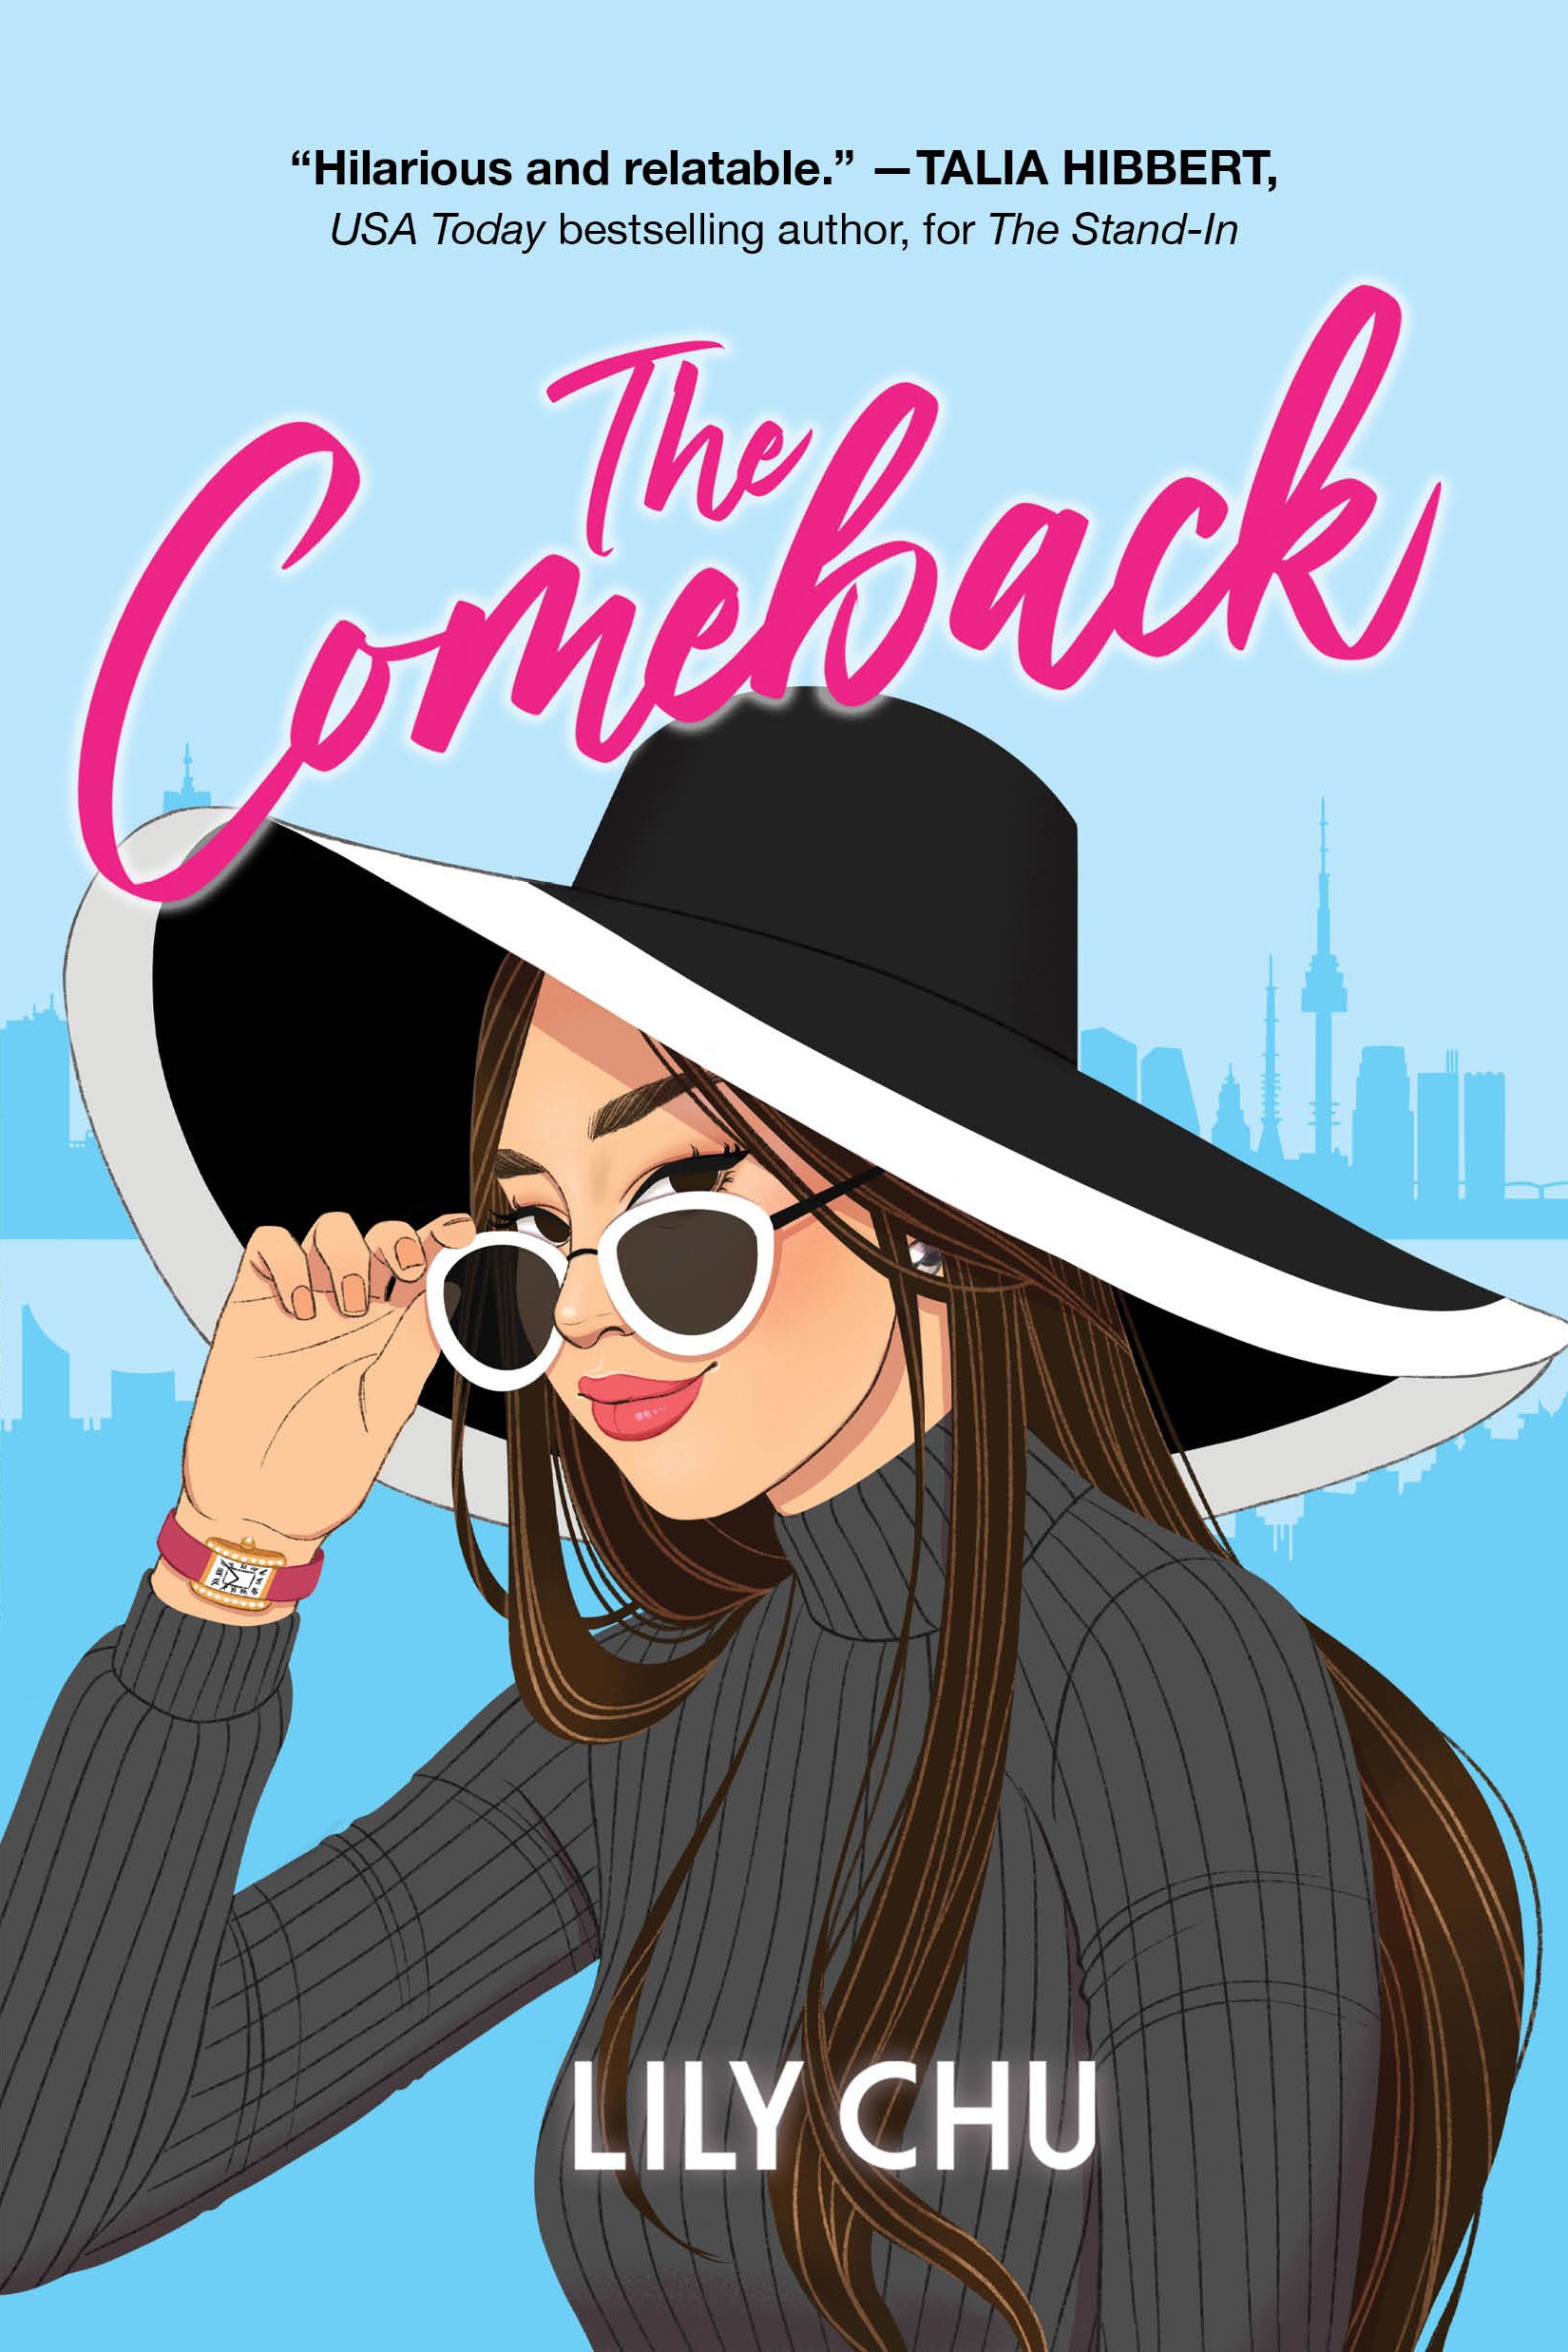 The Comeback — Lily Chu